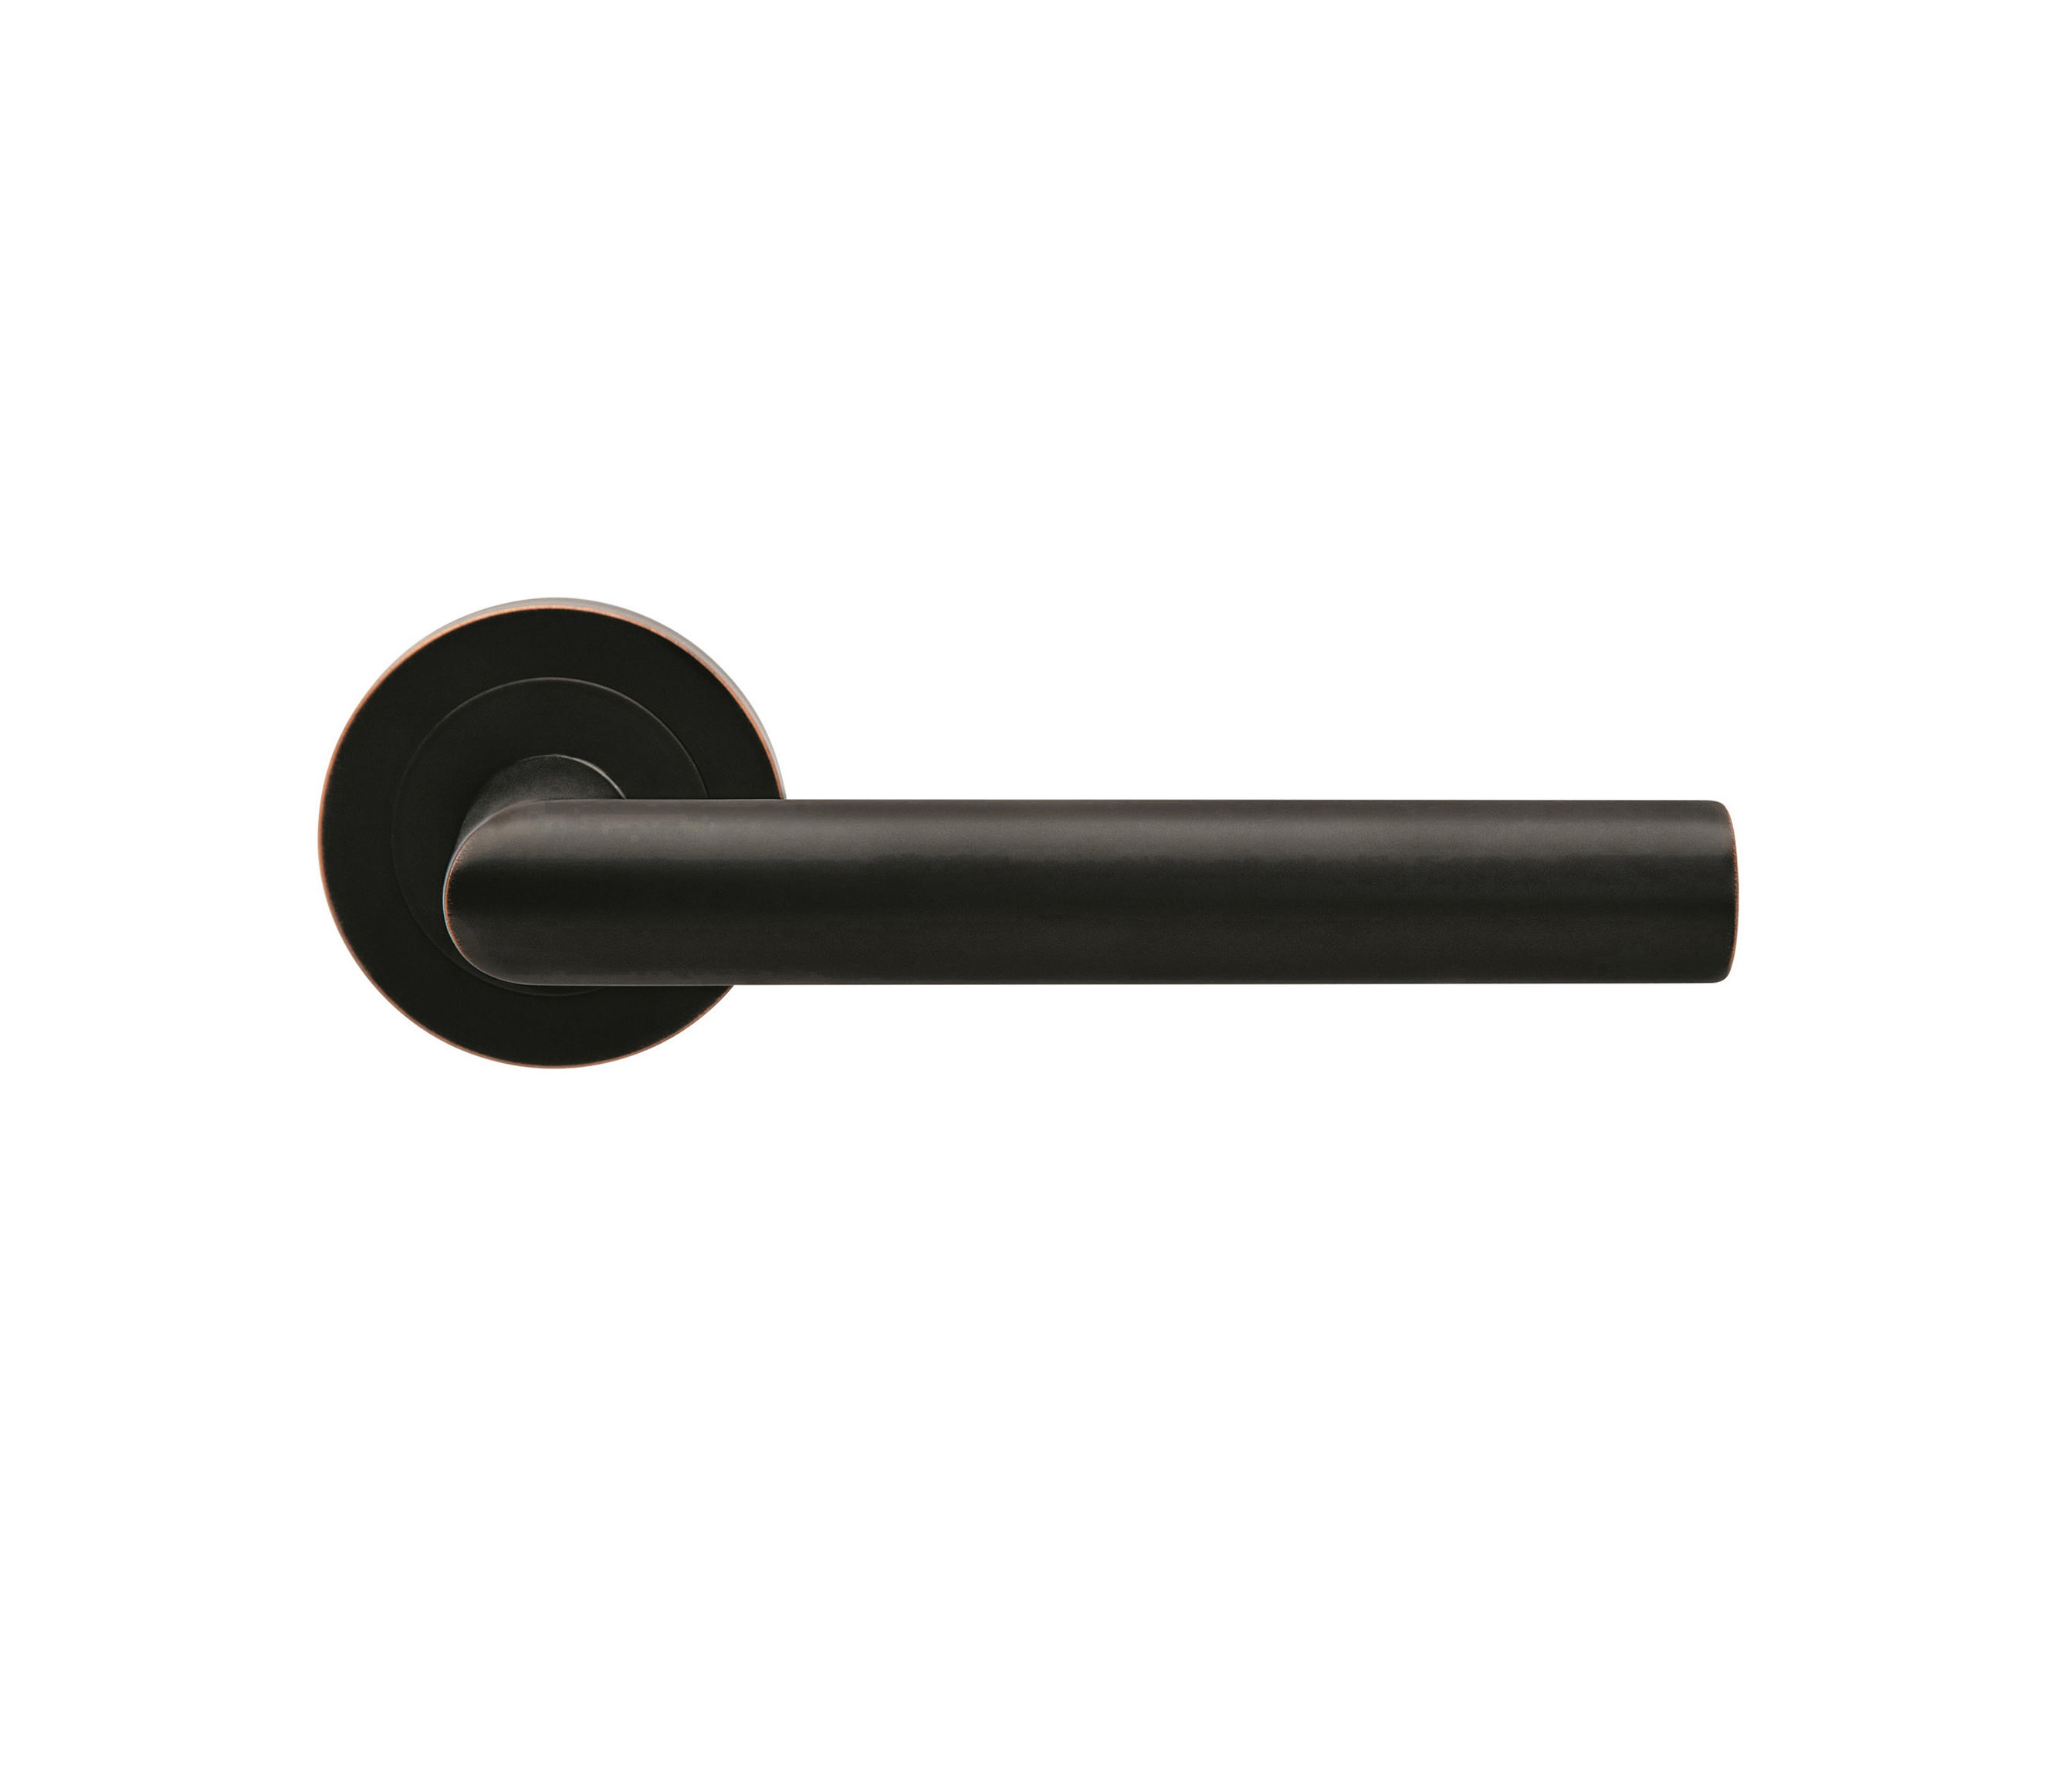 Black handle. Ручка дверная черная 360pl65c-ara9005o. Ручка дверная loid 425 BL - матовый черный. V54 Black Vintage ручка дверная. Дверная ручка BRW-2033.